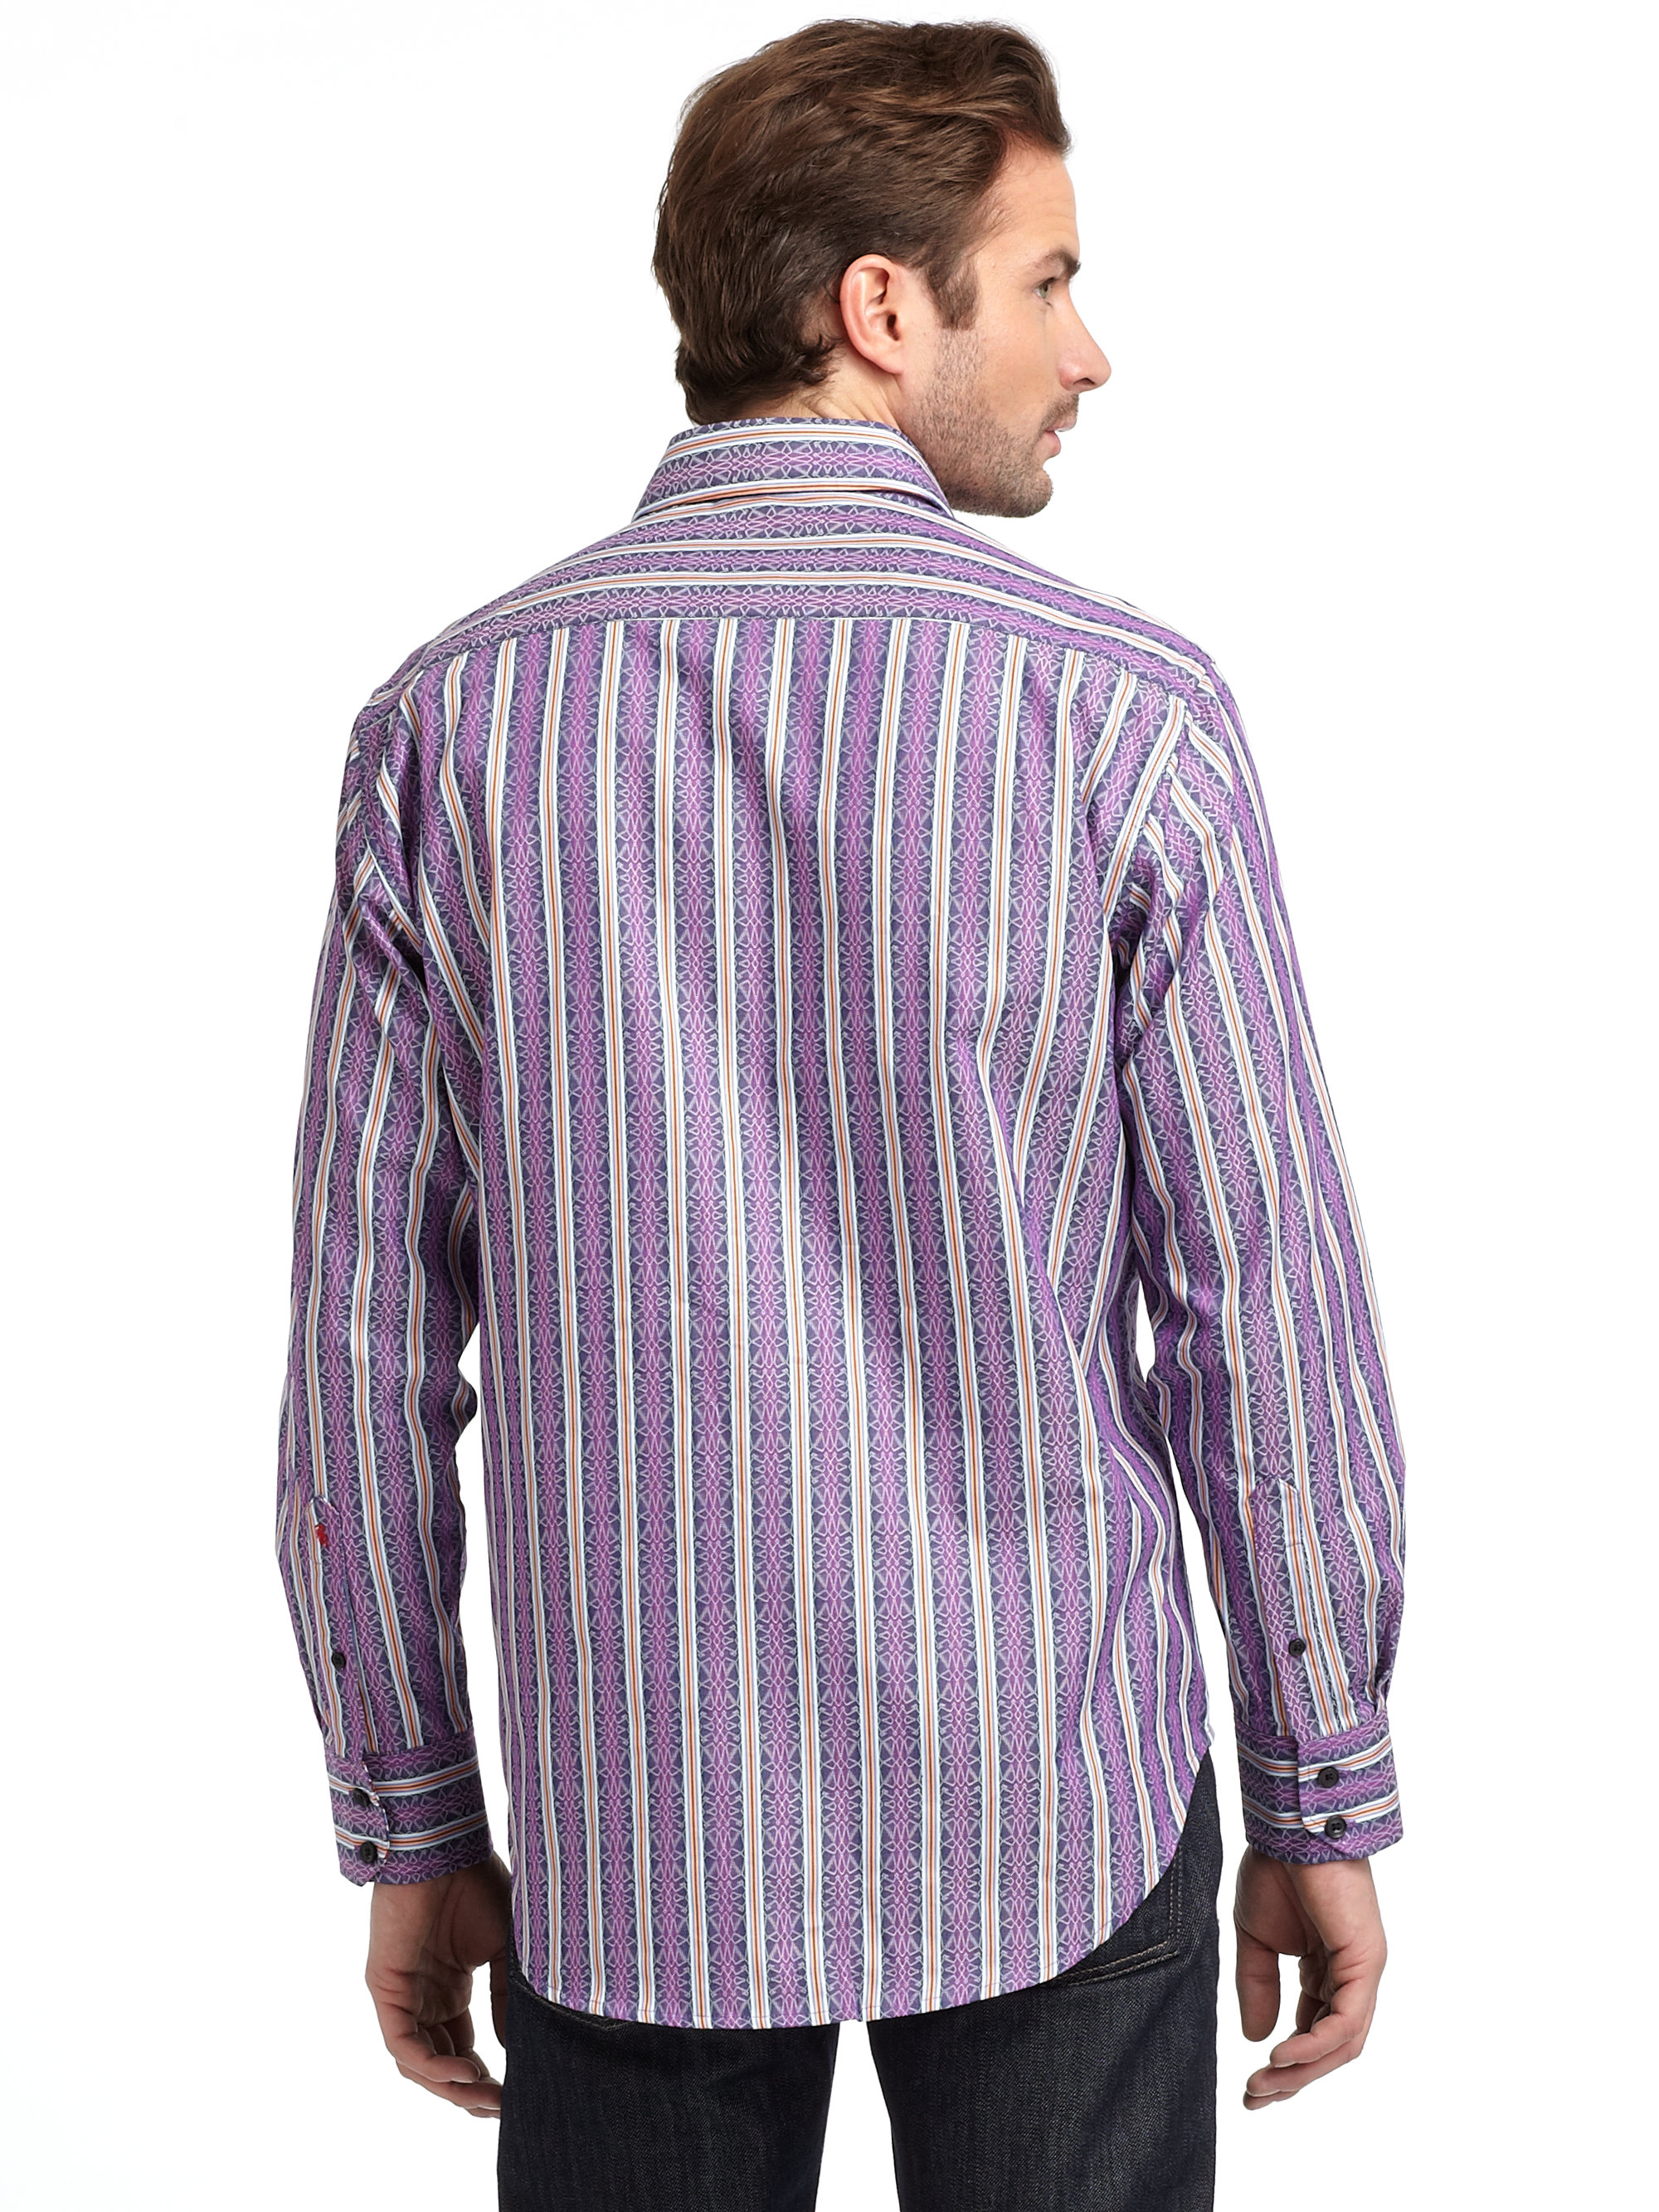 Lyst - Robert Graham Woven Cotton Laser Stripe Buttondown Shirt in